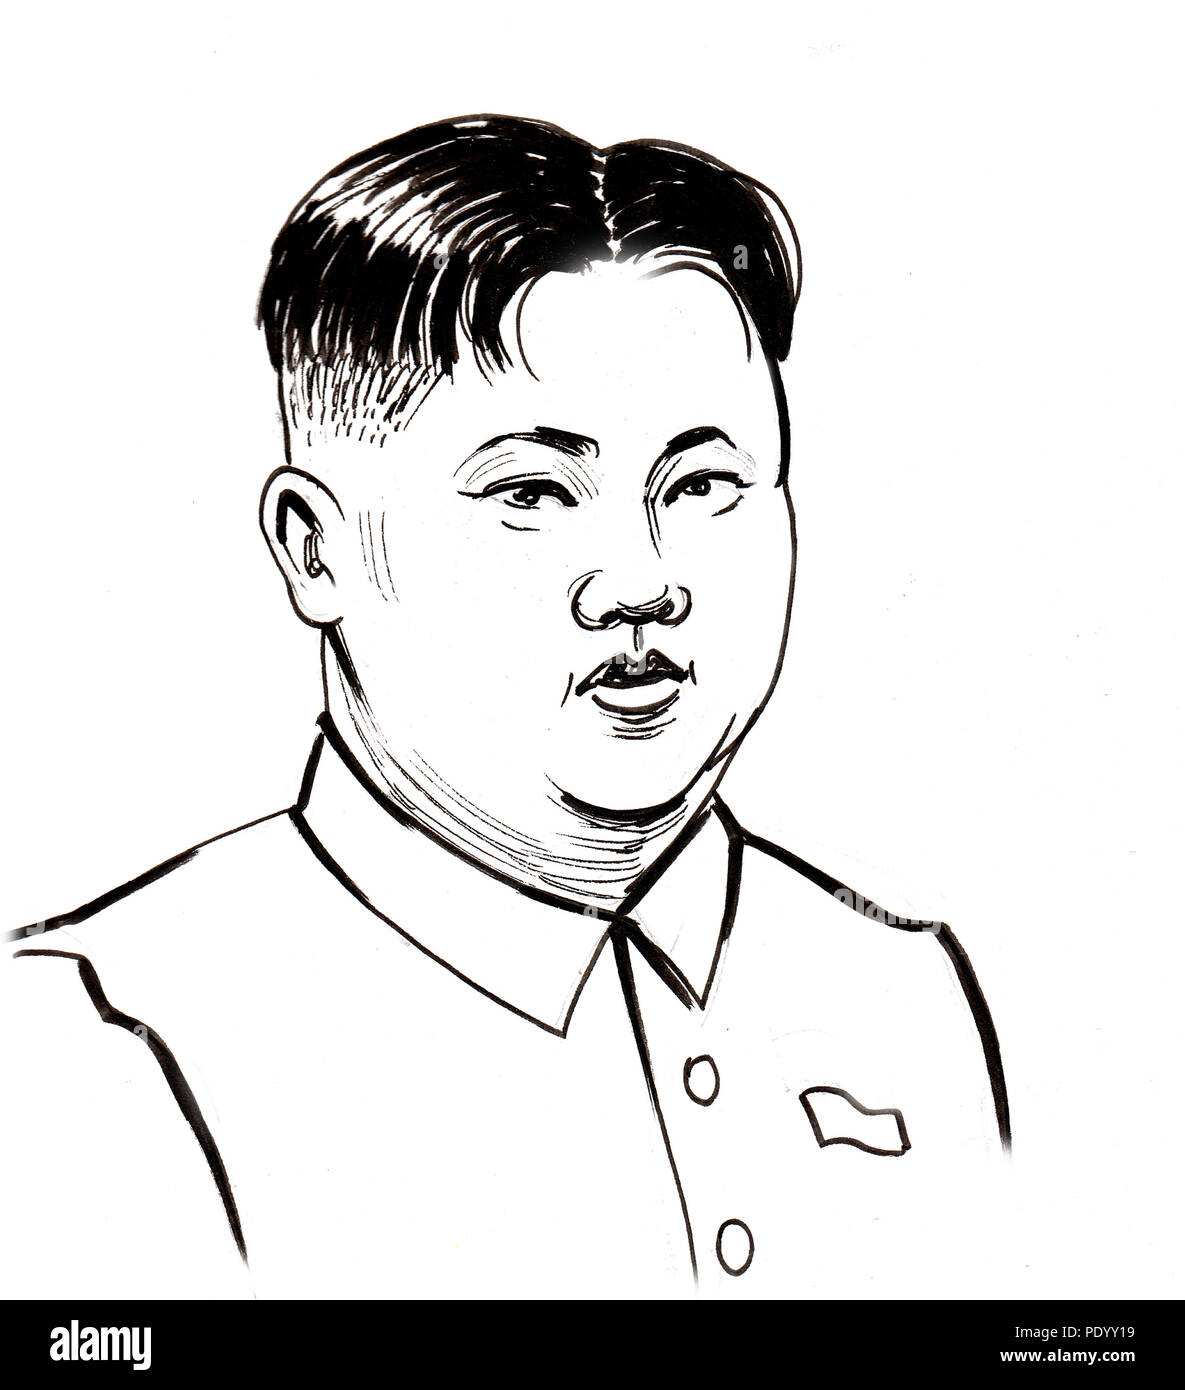 pencil sketch of kim jong un by khatriarts on DeviantArt